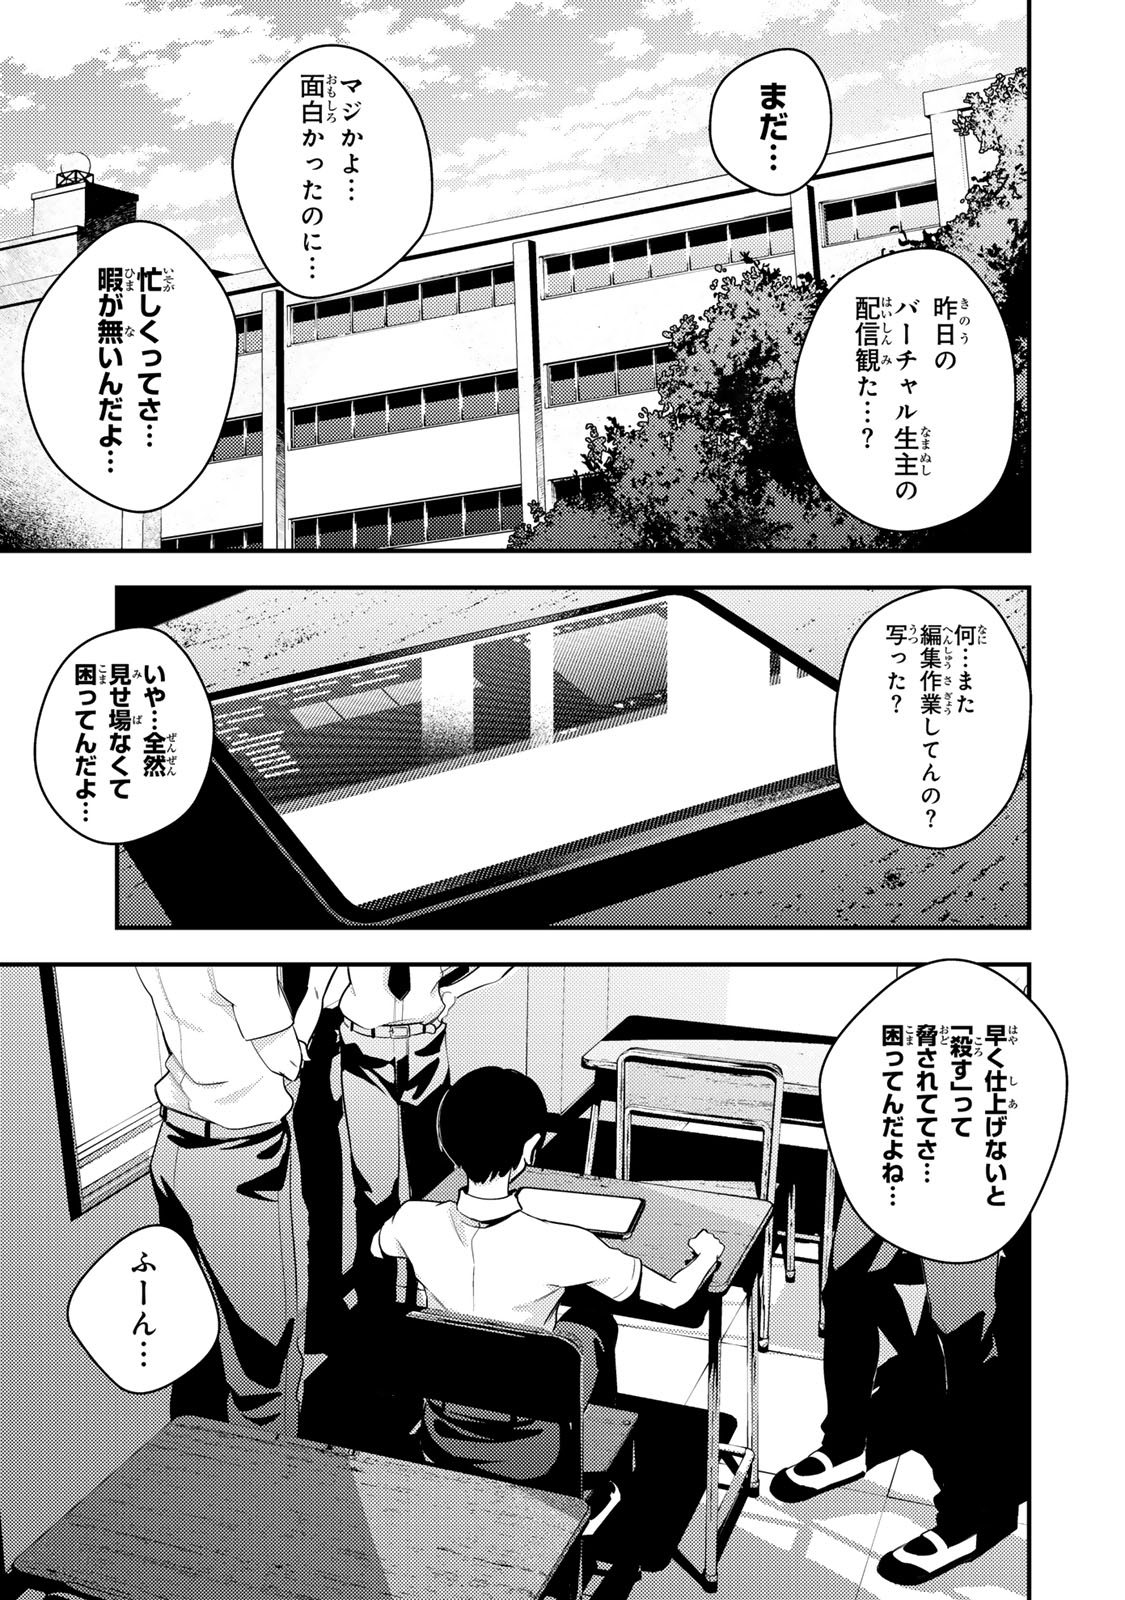 Seima Toubatsu Deneidan - Chapter 1 - Page 2